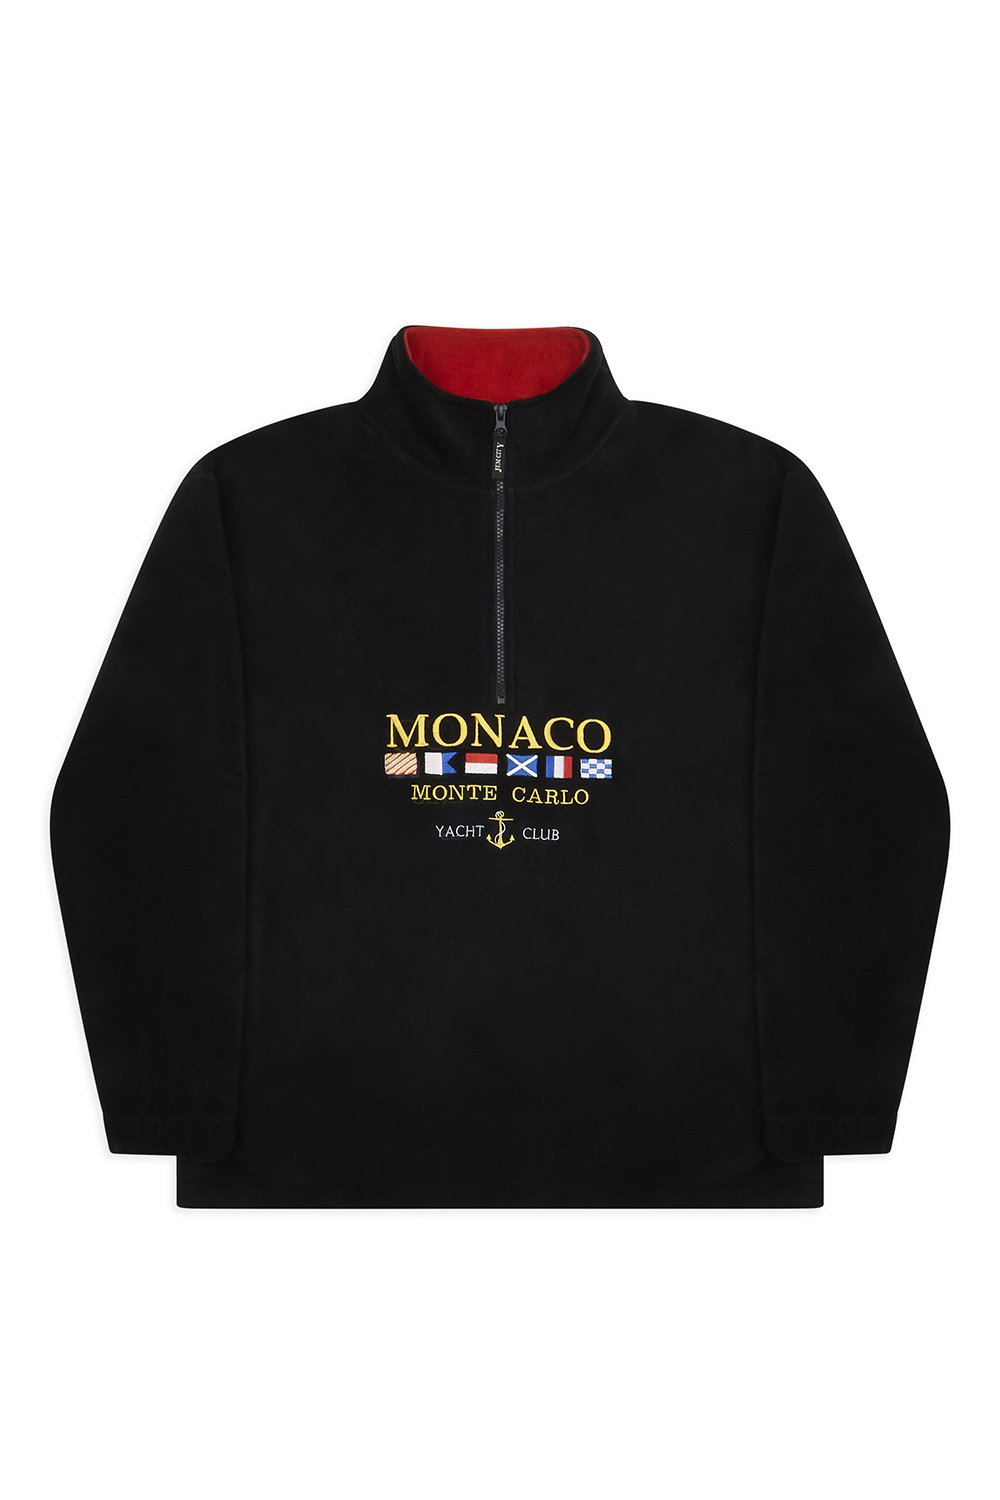 Image of Monaco Vintage Fleece Black